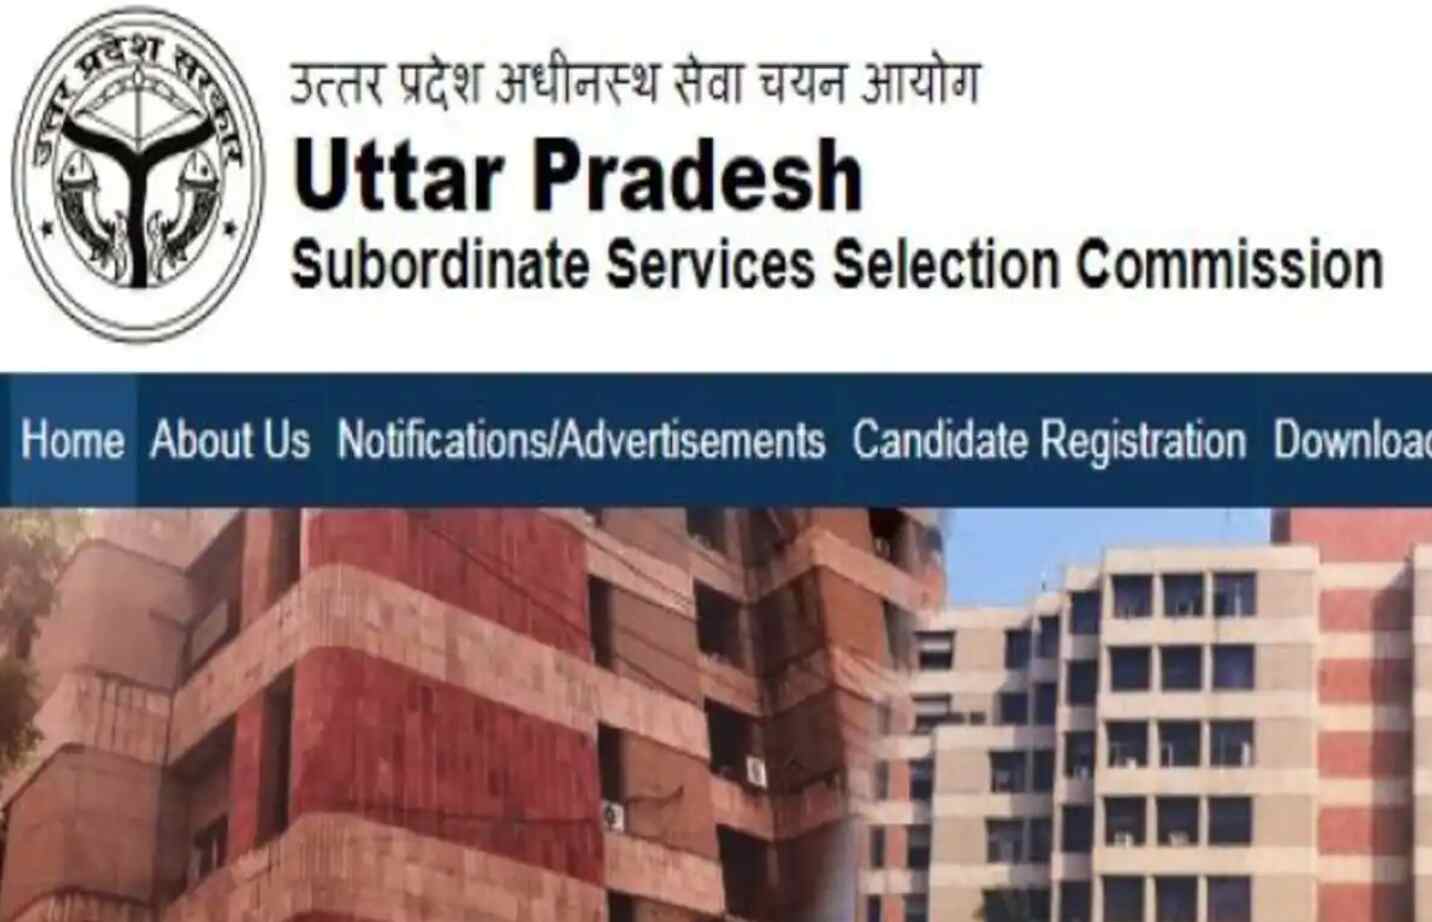 UPSSSC released 2022 Calendar for Uttar Pradesh Subordinate Services